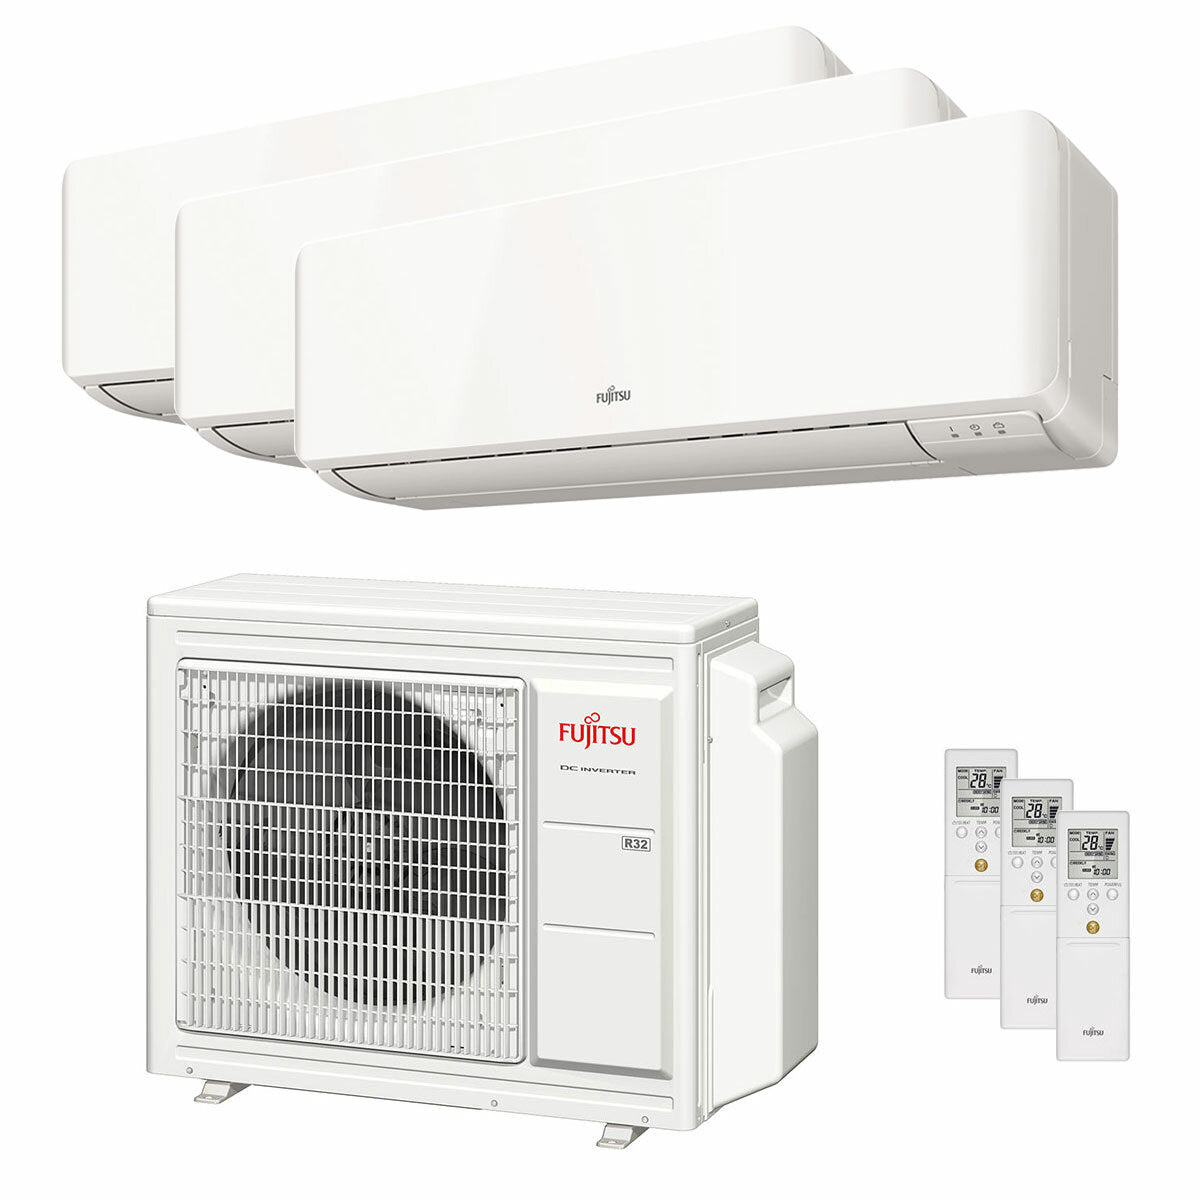 Fujitsu air conditioner KM WiFi Series trial split 7000+7000+9000 BTU inverter A+++ external unit 5.4 kW